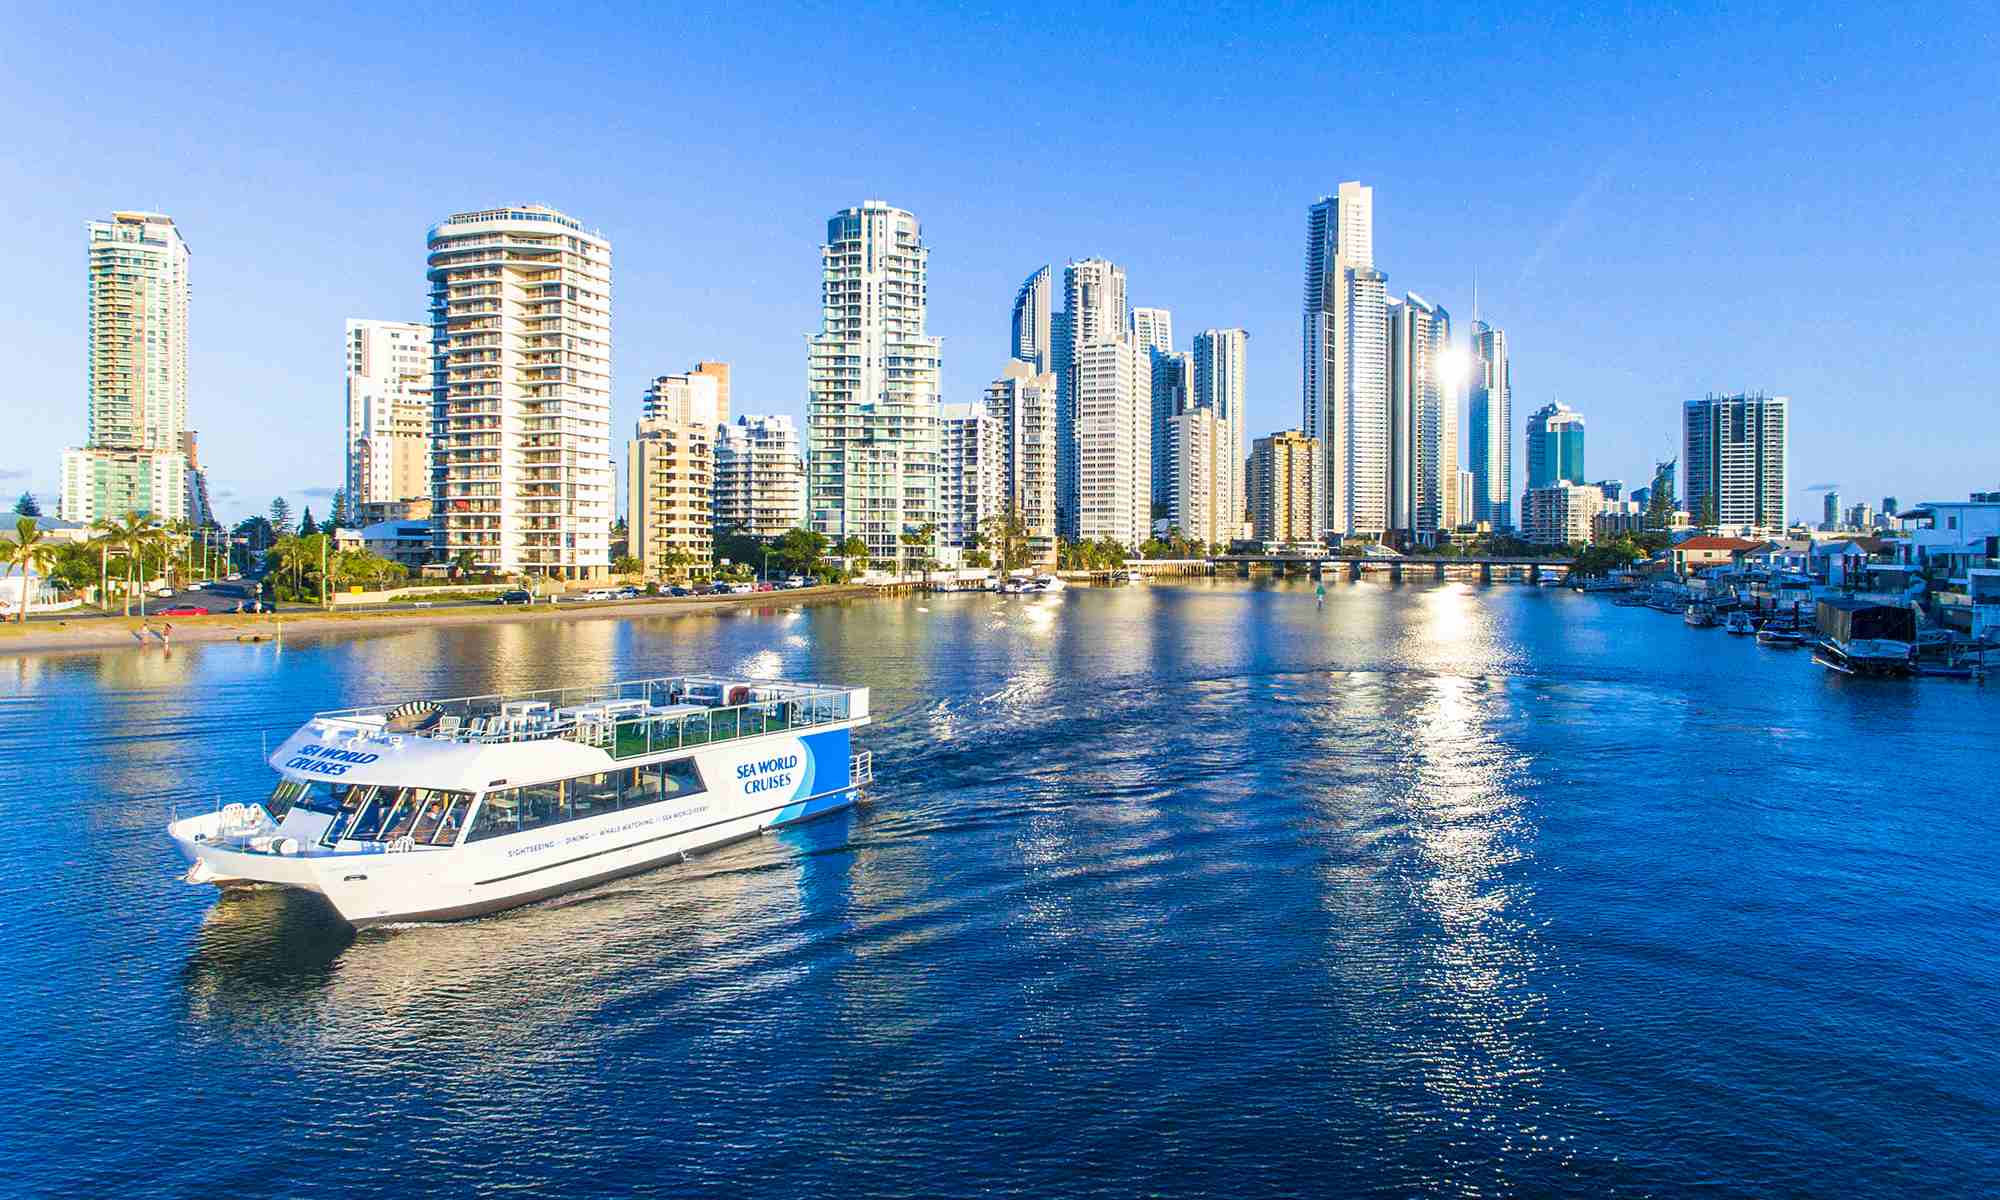 Surfers Paradise River Cruises & Boat Tours - Australian Cruise Group